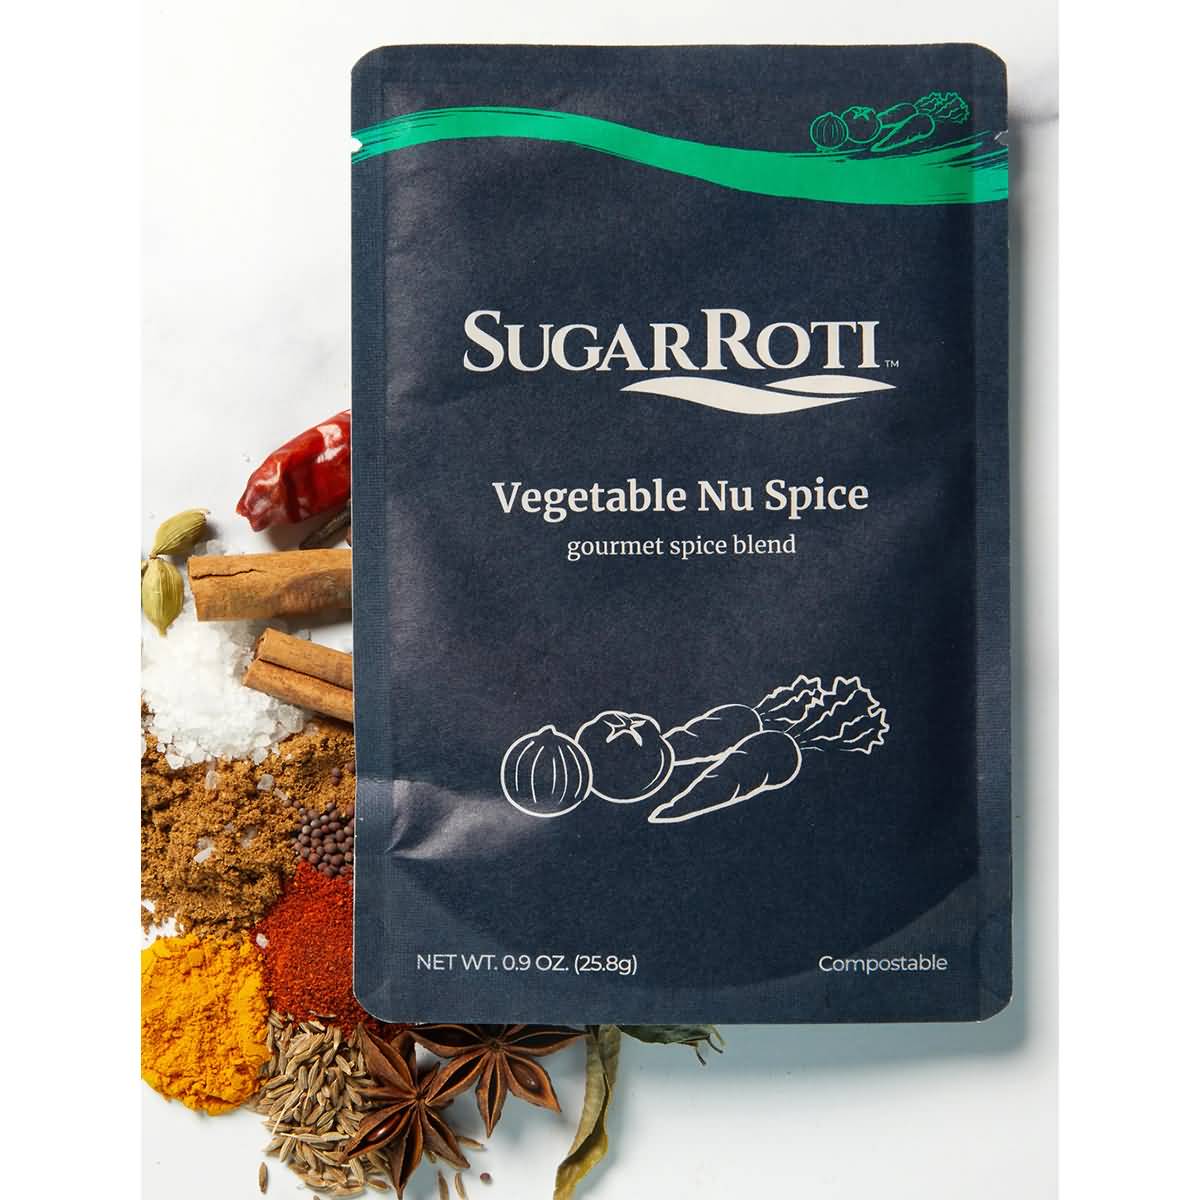 Sugar Roti Spice Packaging